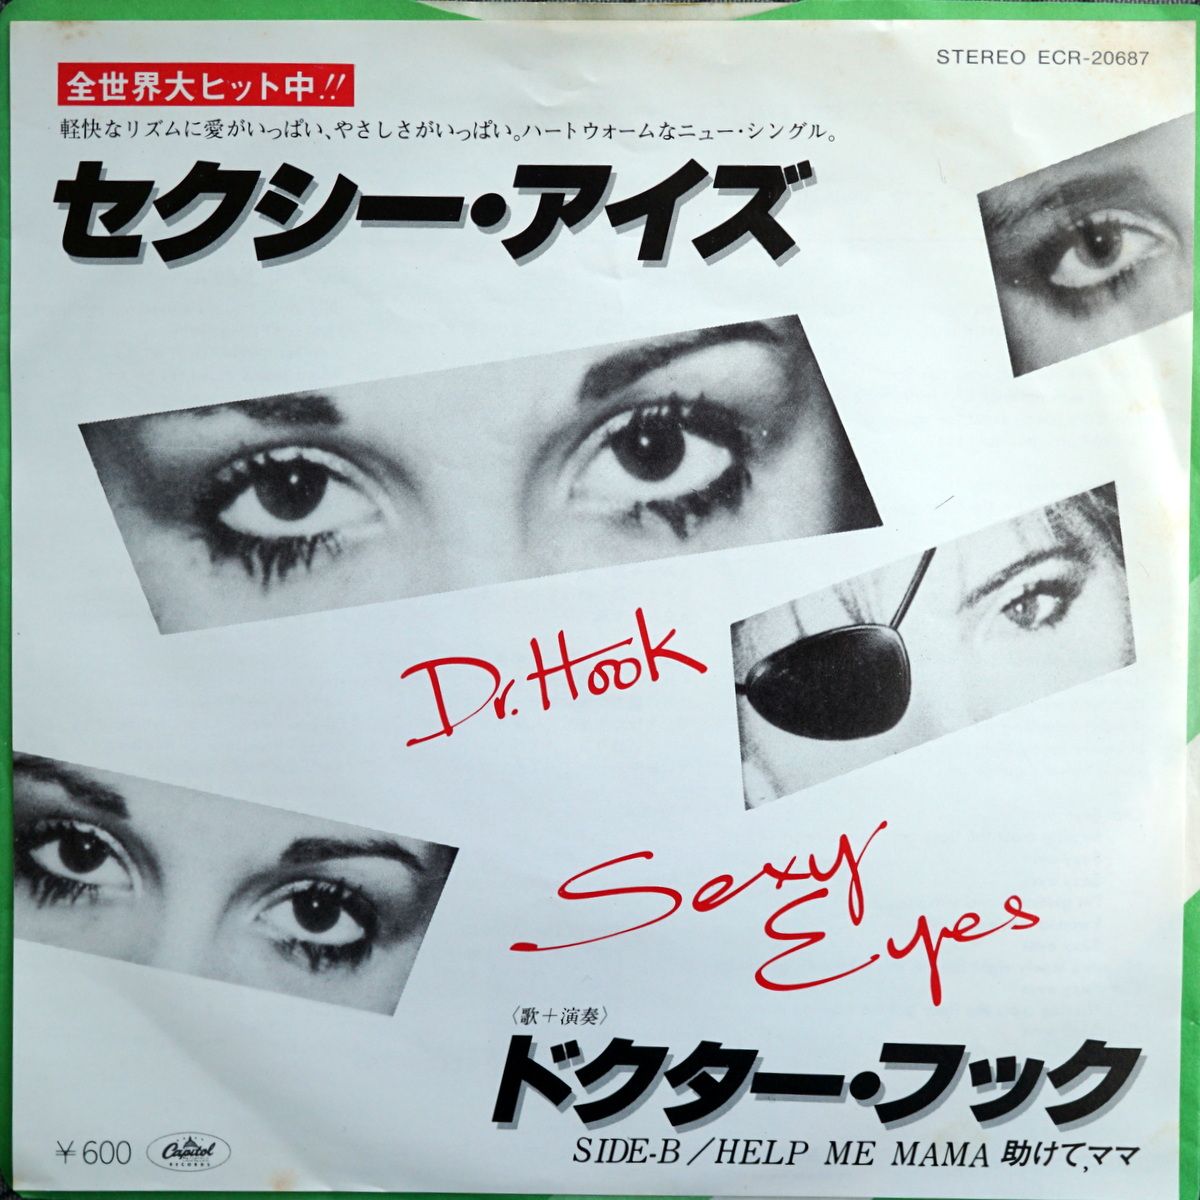 S SW A3 - ECR 20687  - Sexy Eyes - 1979 - JP